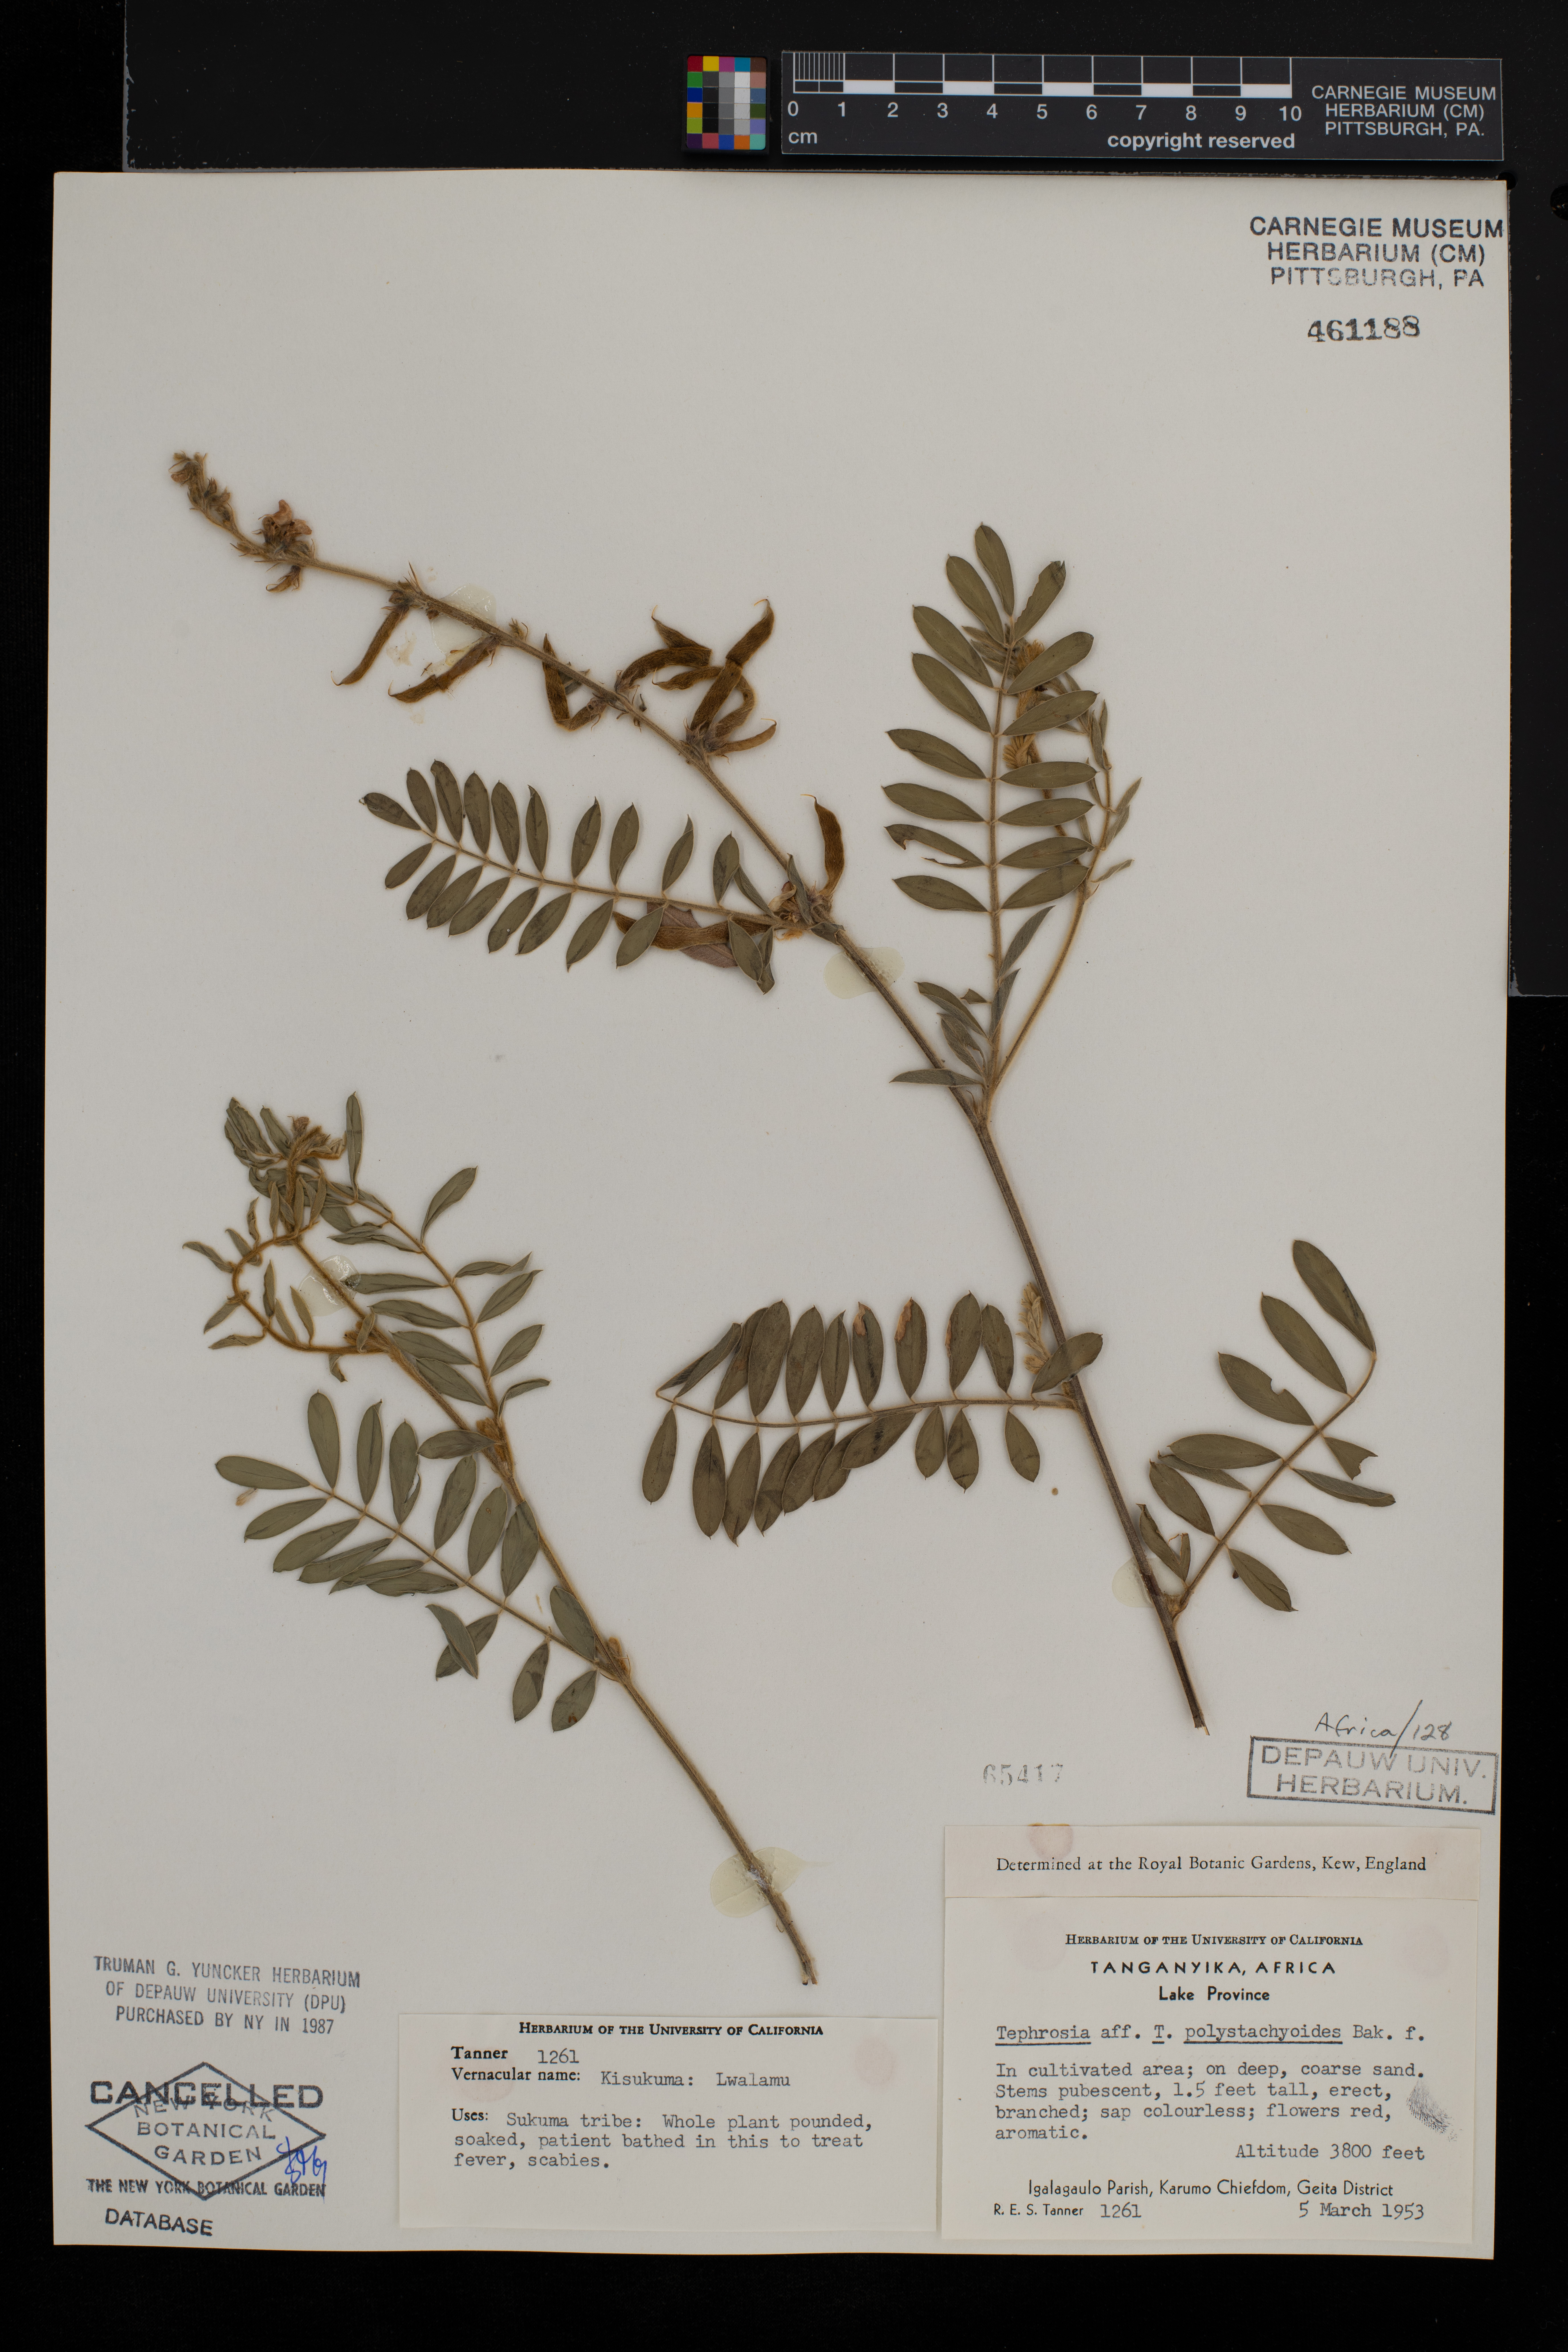 Tephrosia rhodesica var. polystachyoides image